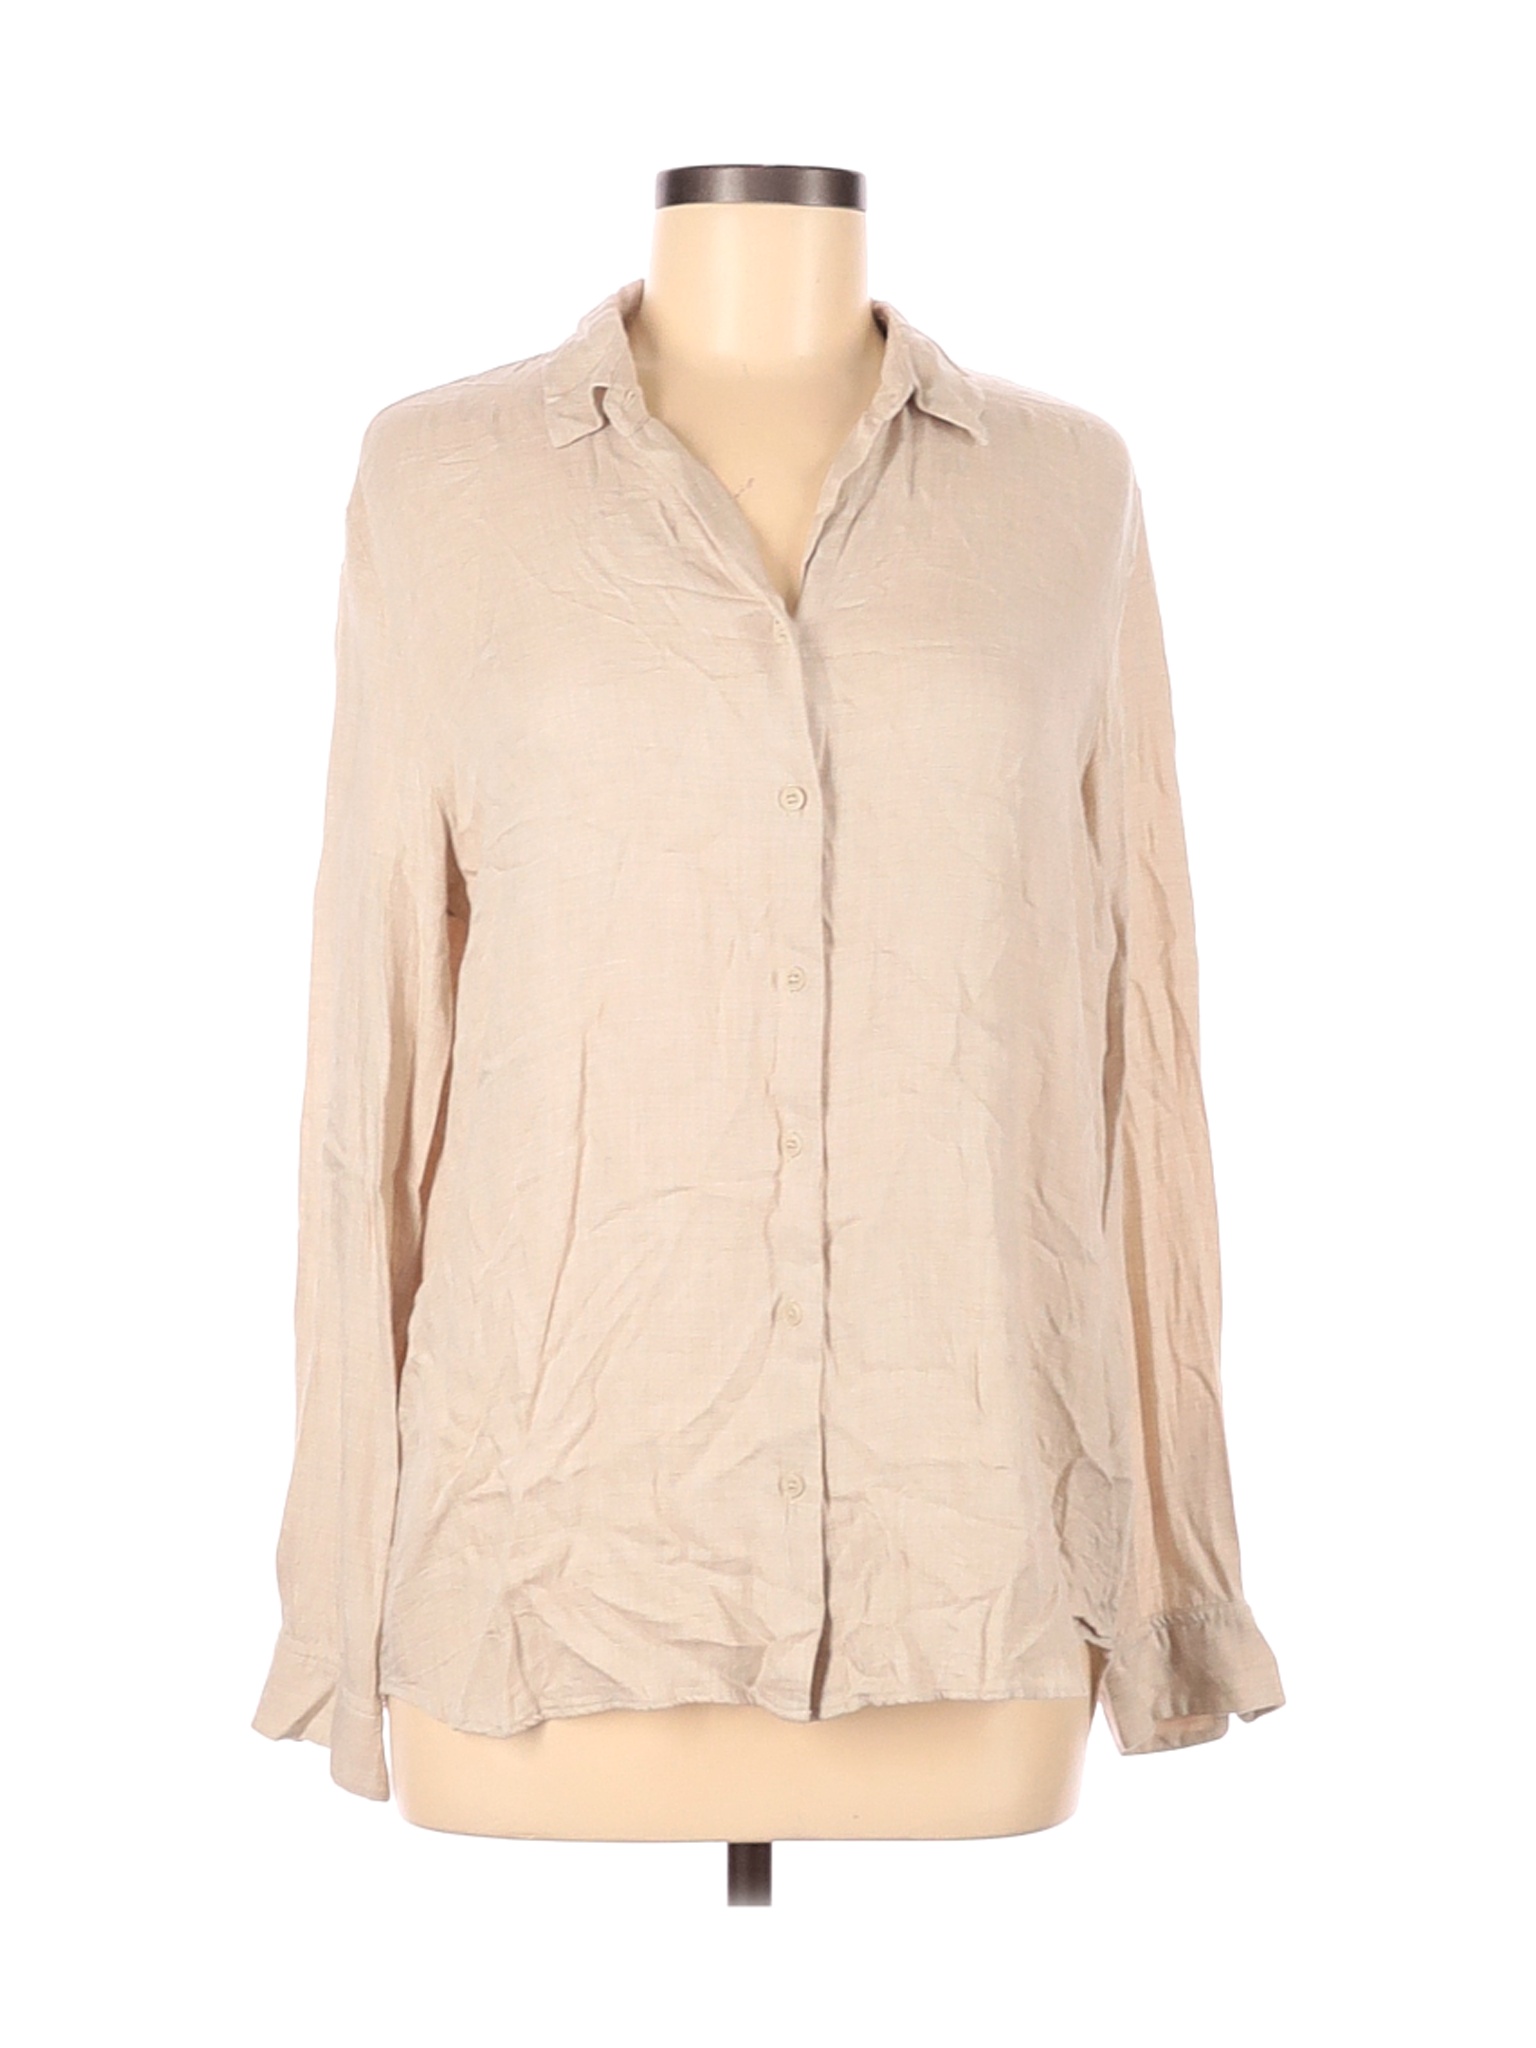 Uniqlo Women Brown Long Sleeve Button-Down Shirt M | eBay